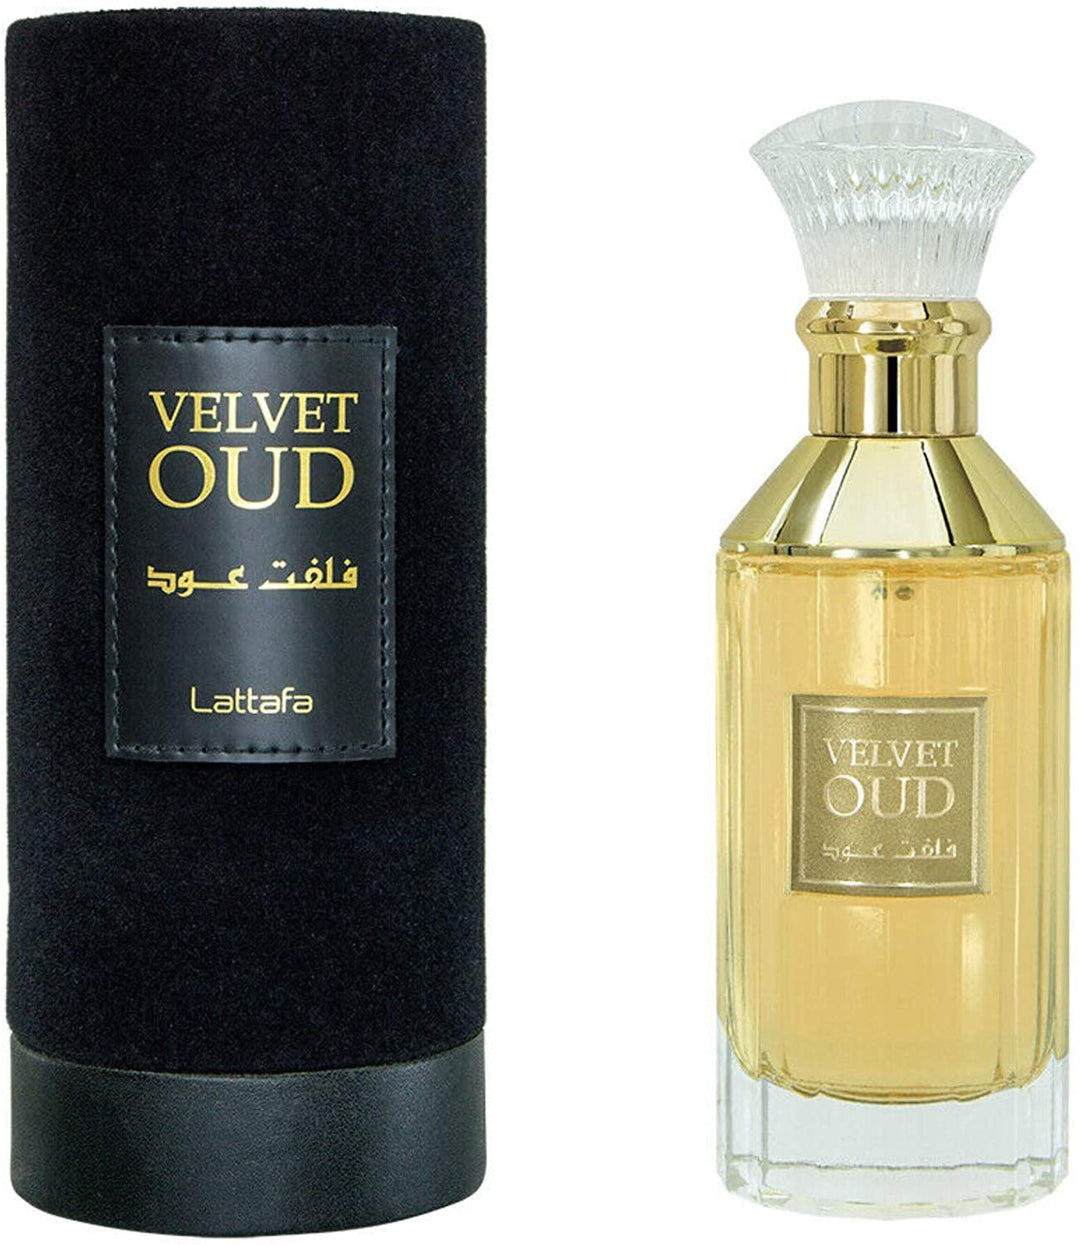 Velvet Oud Eau De Parfum - Lattafa - 100 ml - Islamic Impressions